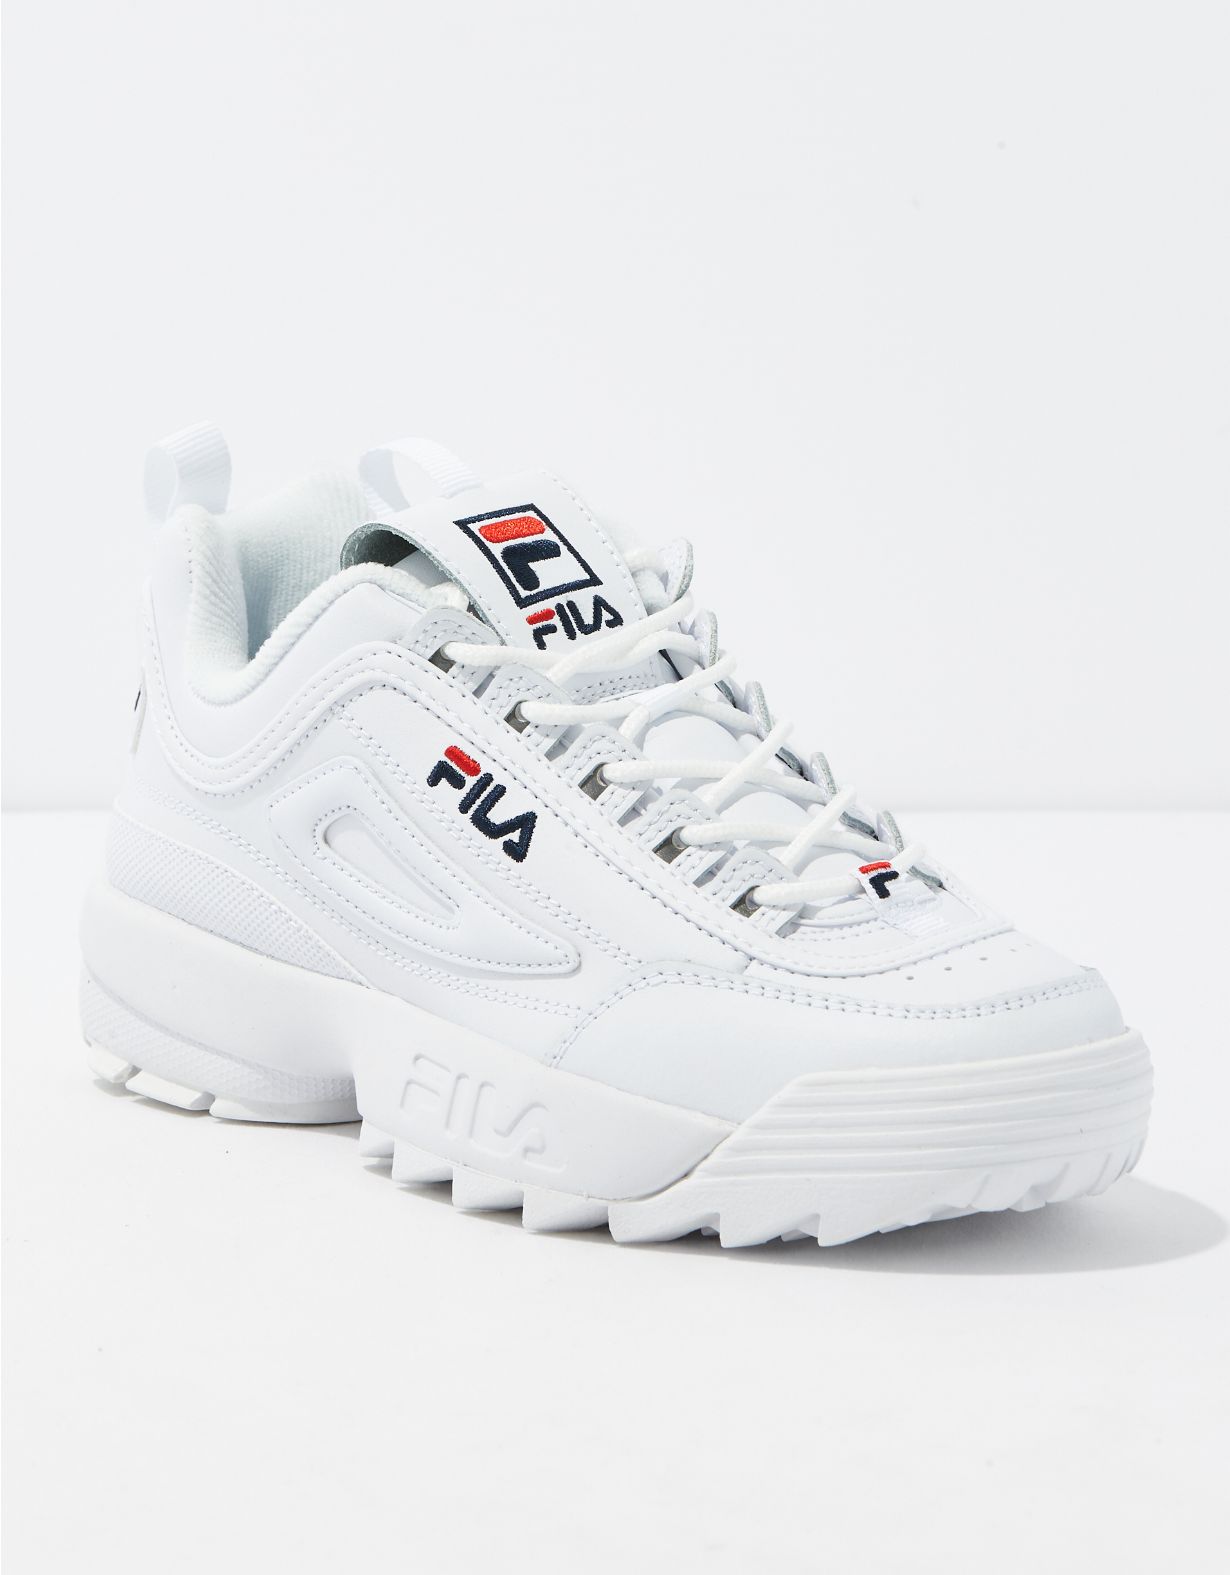 FILA Disruptor Sneaker